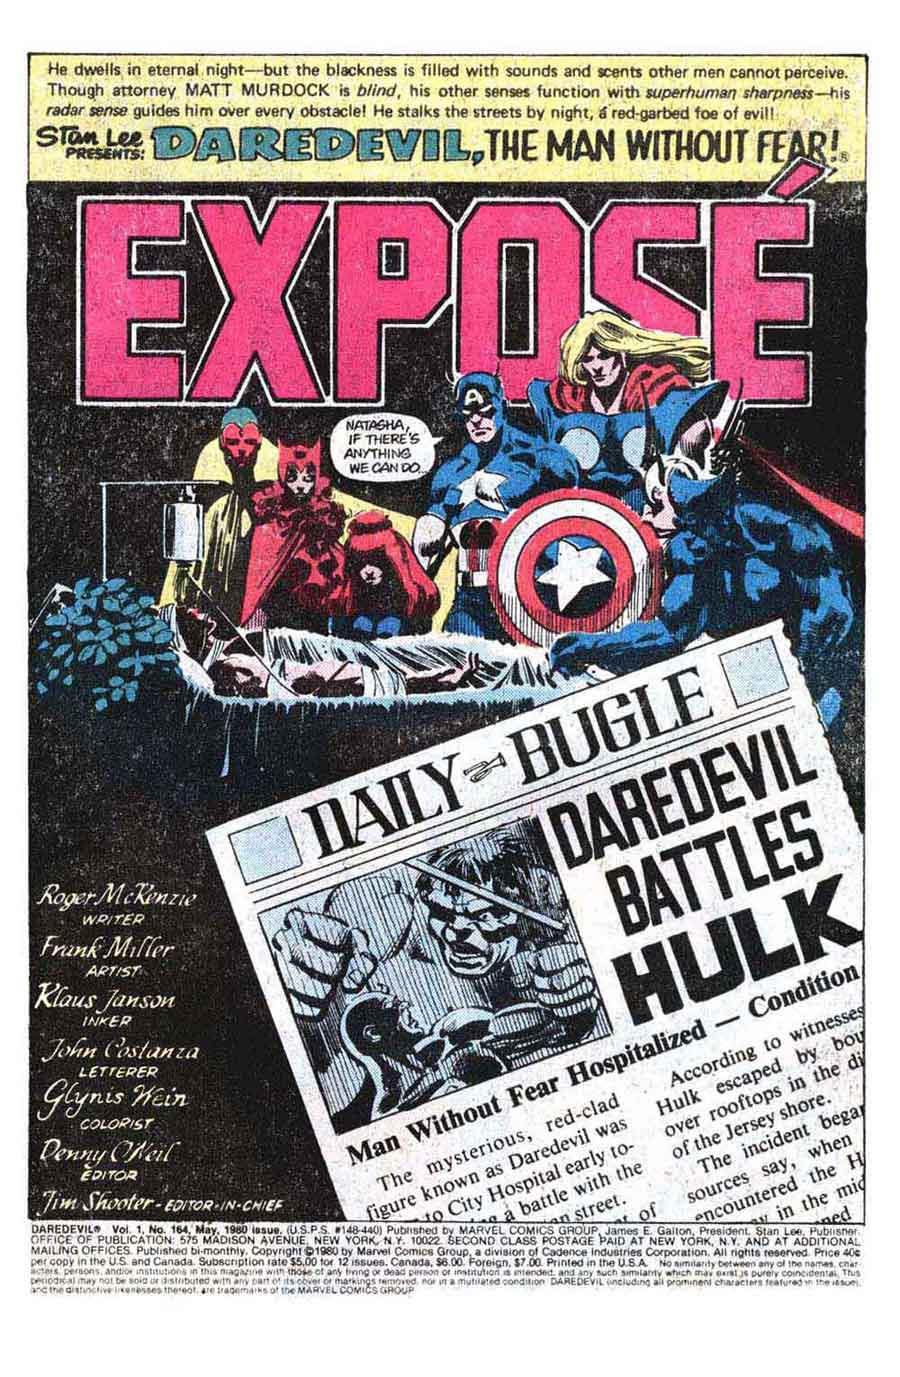 Daredevil v1 #164 marvel comic book splash page art by Frank Miller